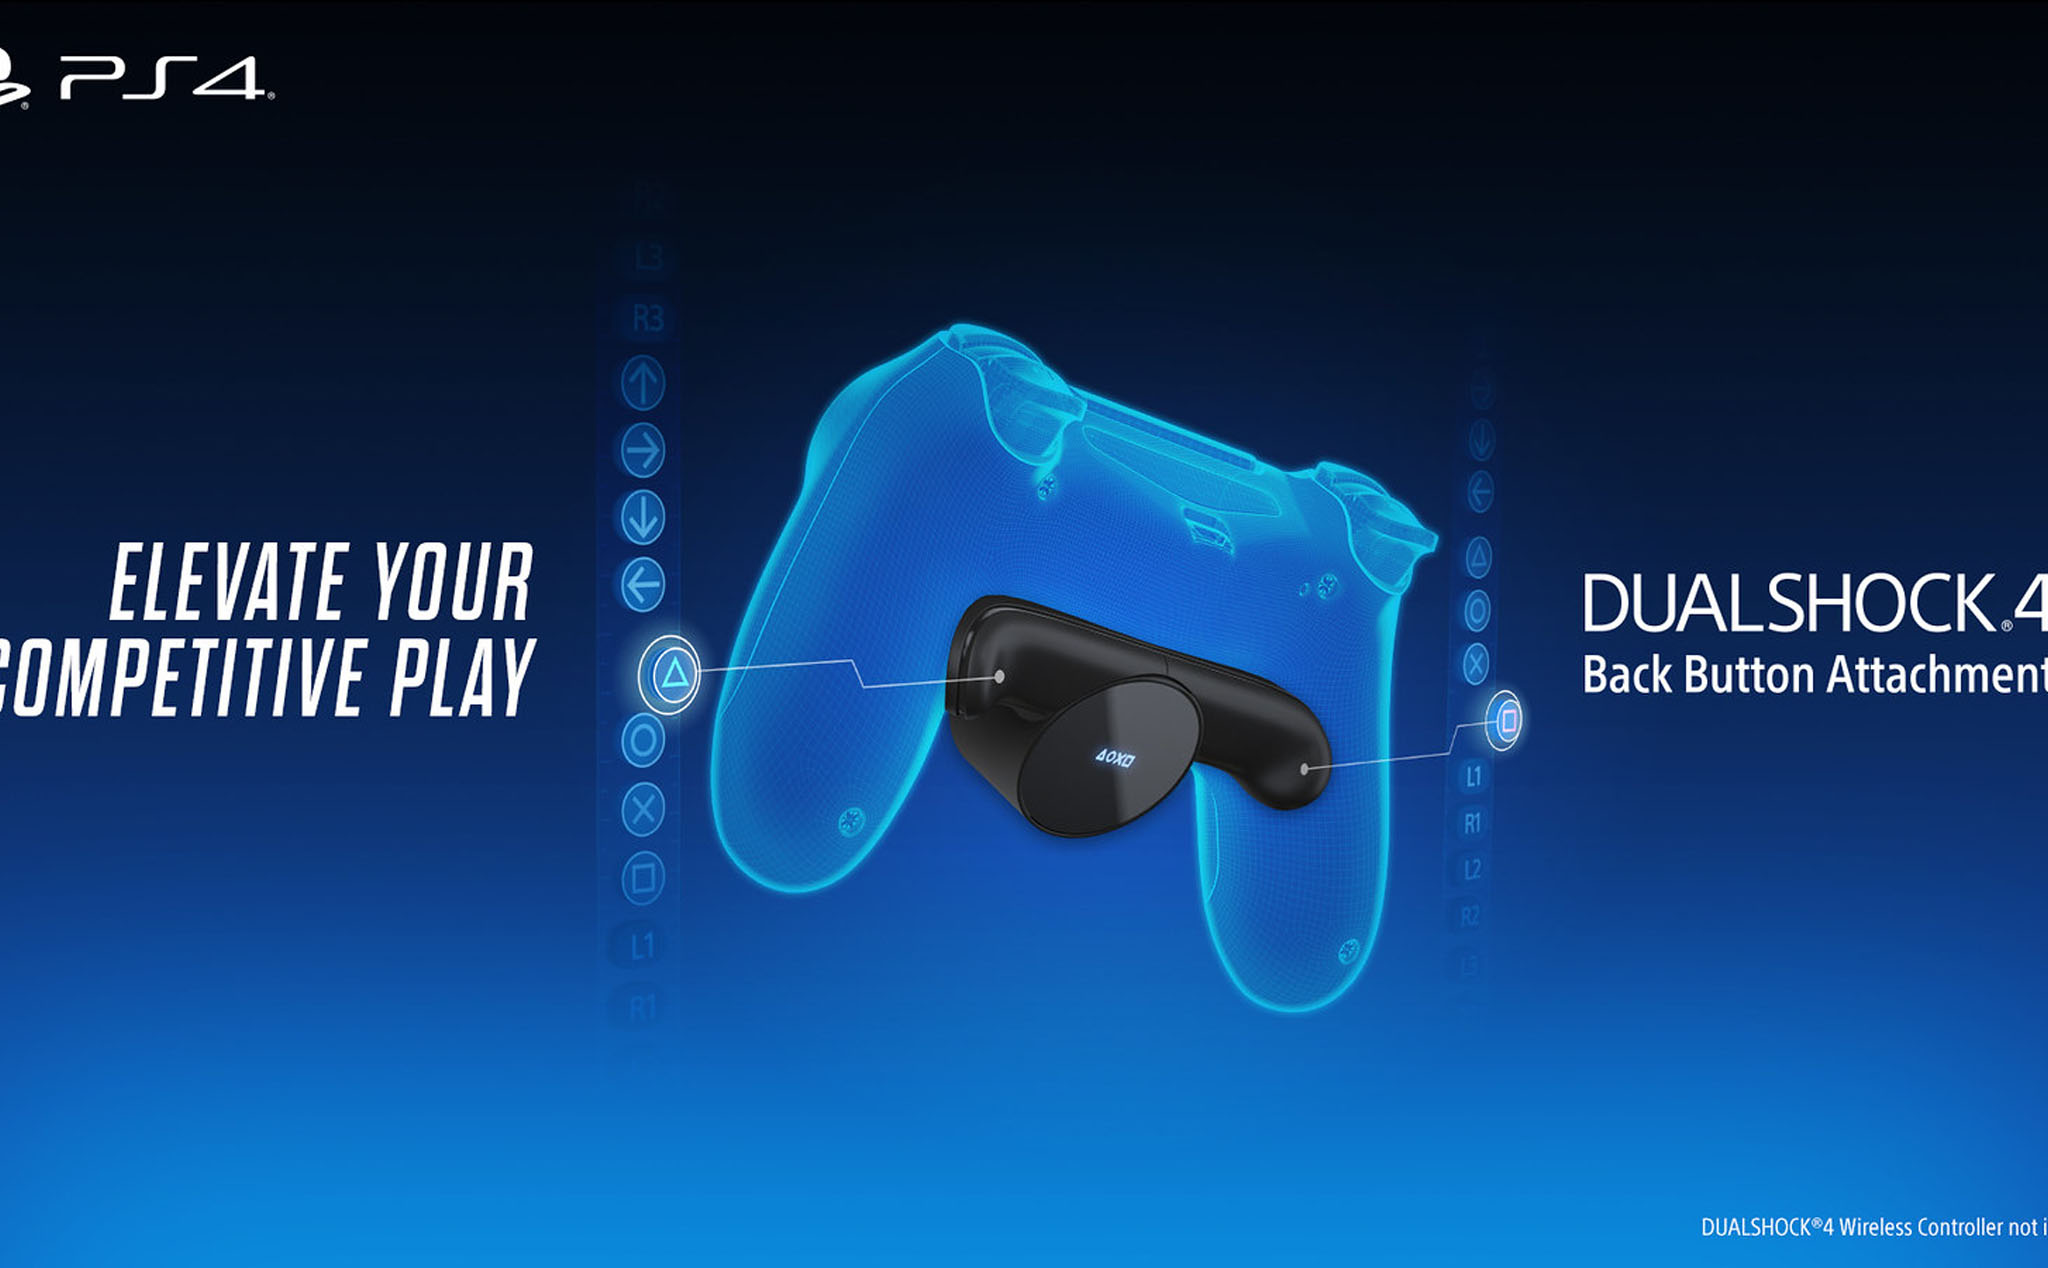 Dualshock 4 Back Button Attachment: Tay cầm PS5 cũng sẽ có nút phụ sau lưng?